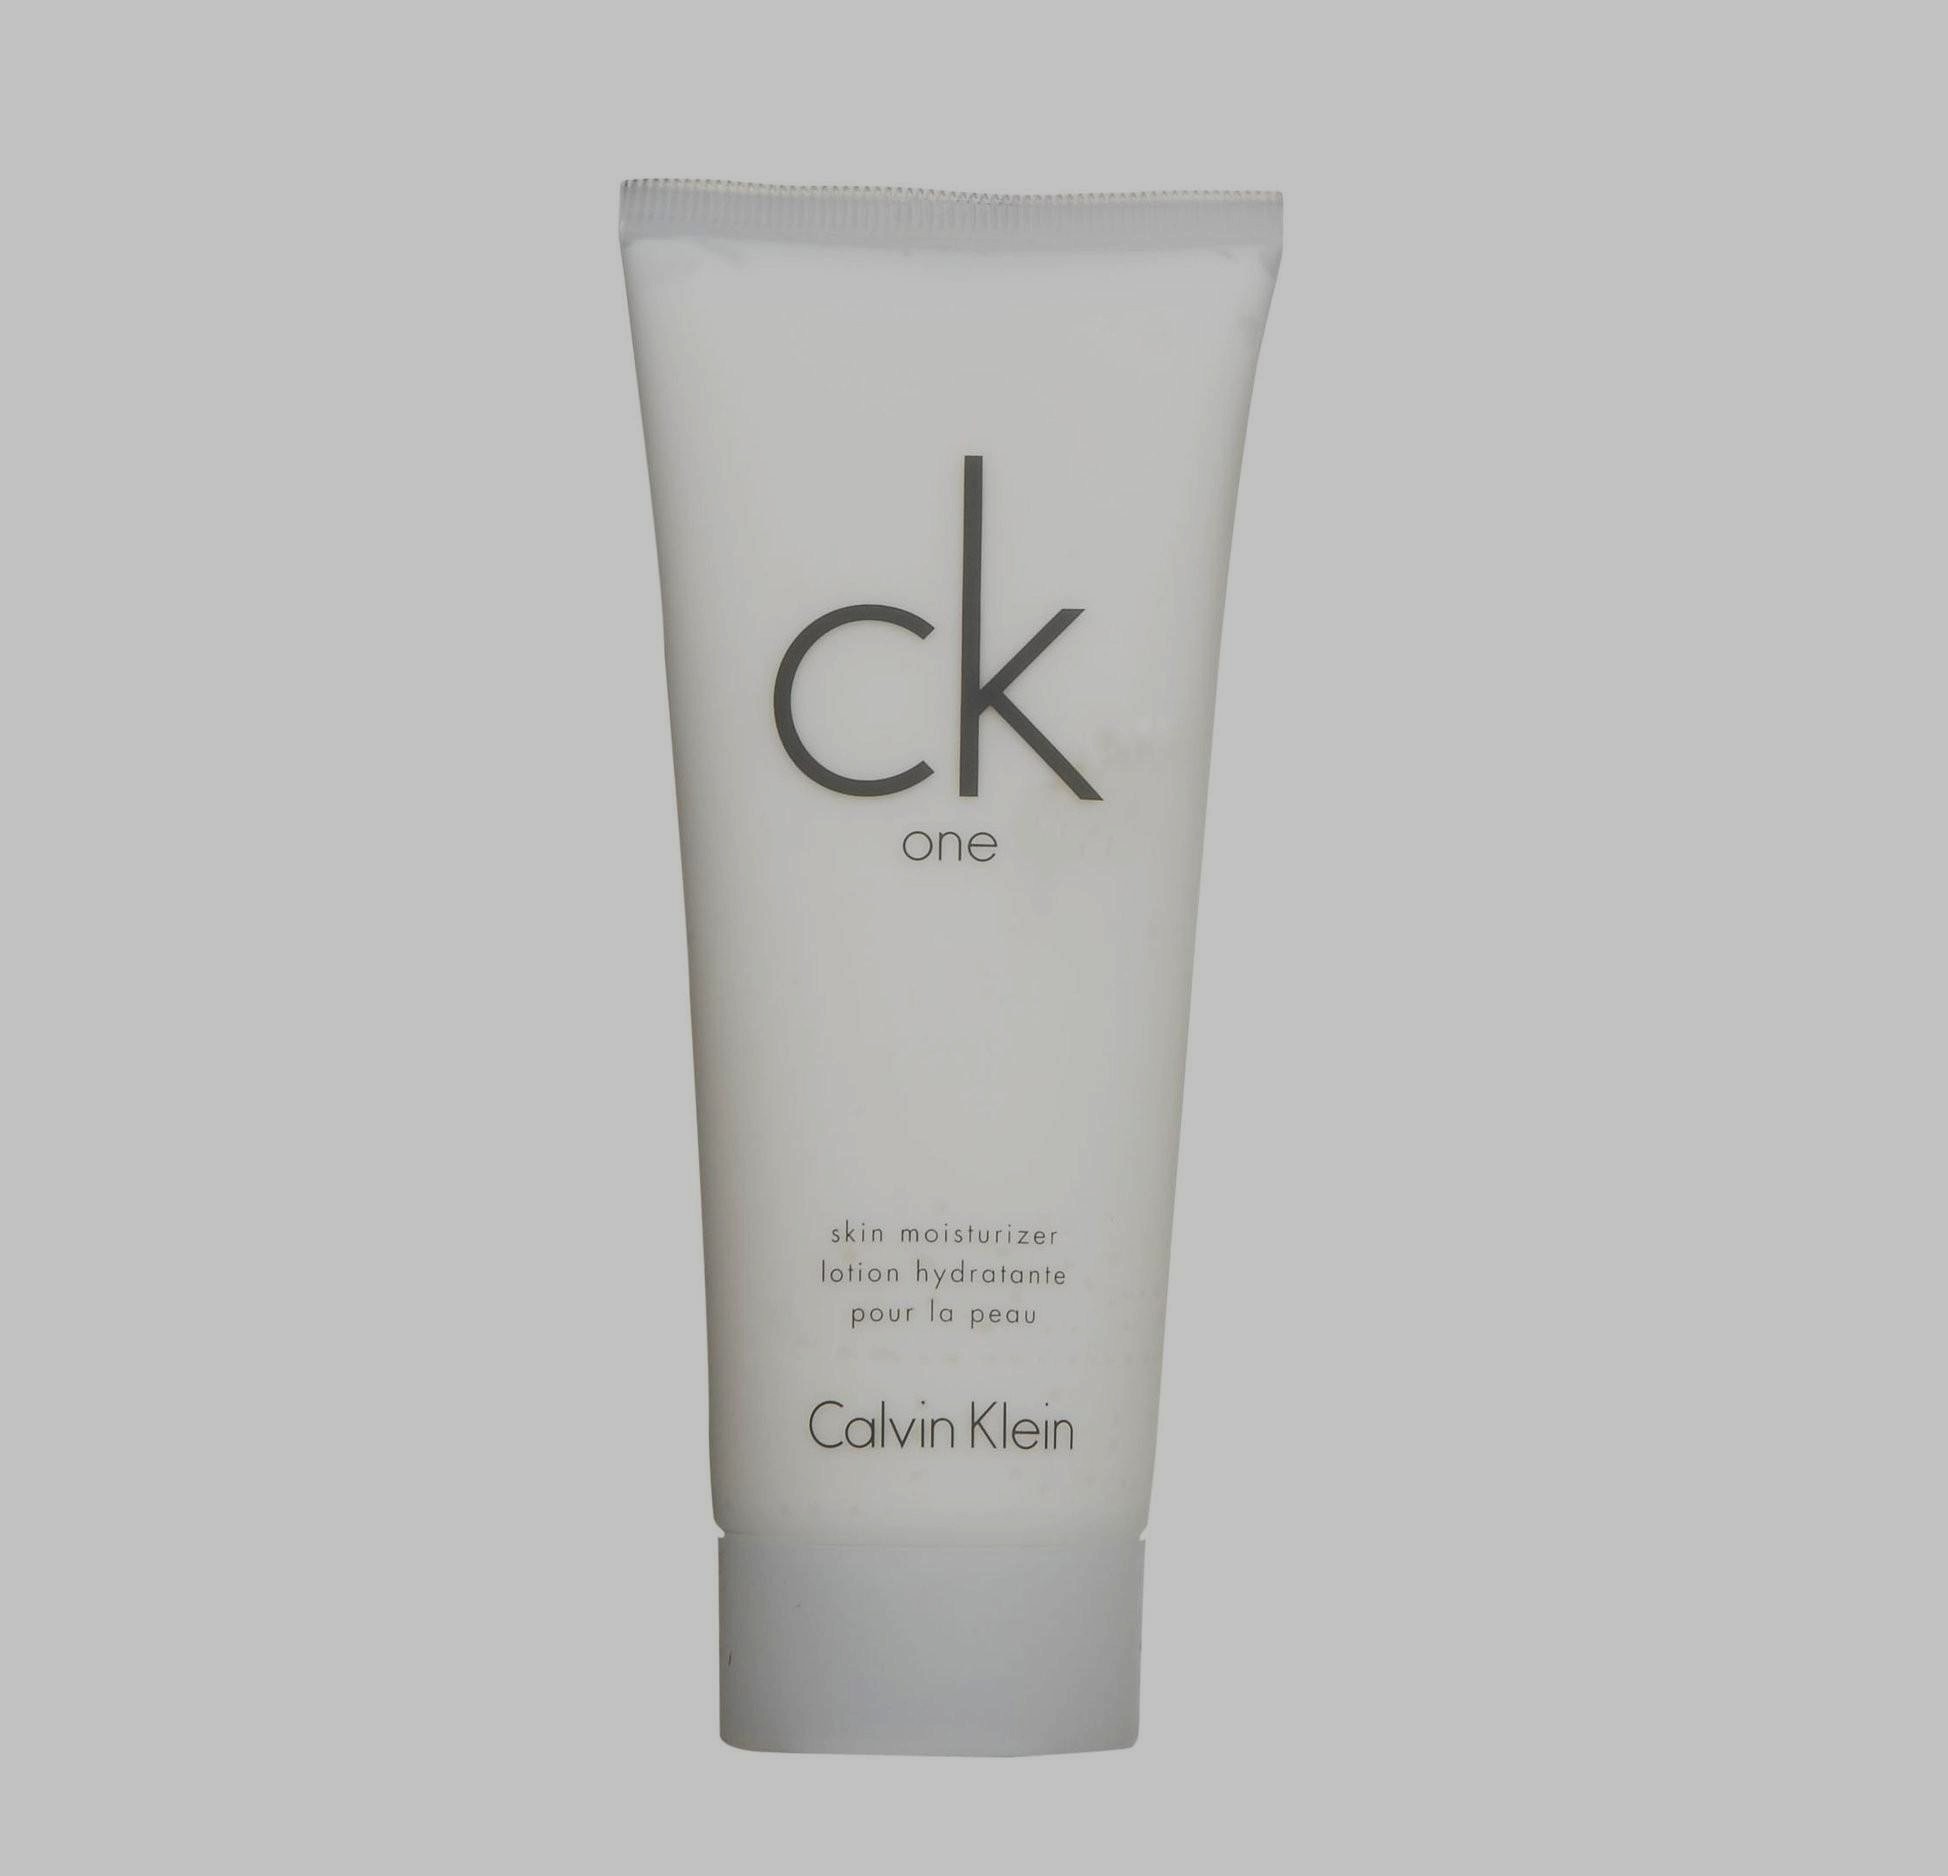 begin samenwerken meisje Calvin Klein CK ONE by CALVIN KLEIN for WOMEN or MEN 6.7 FL.OZ / 200 ML  SKIN MOISTURIZER LOTION HYDRATANTE